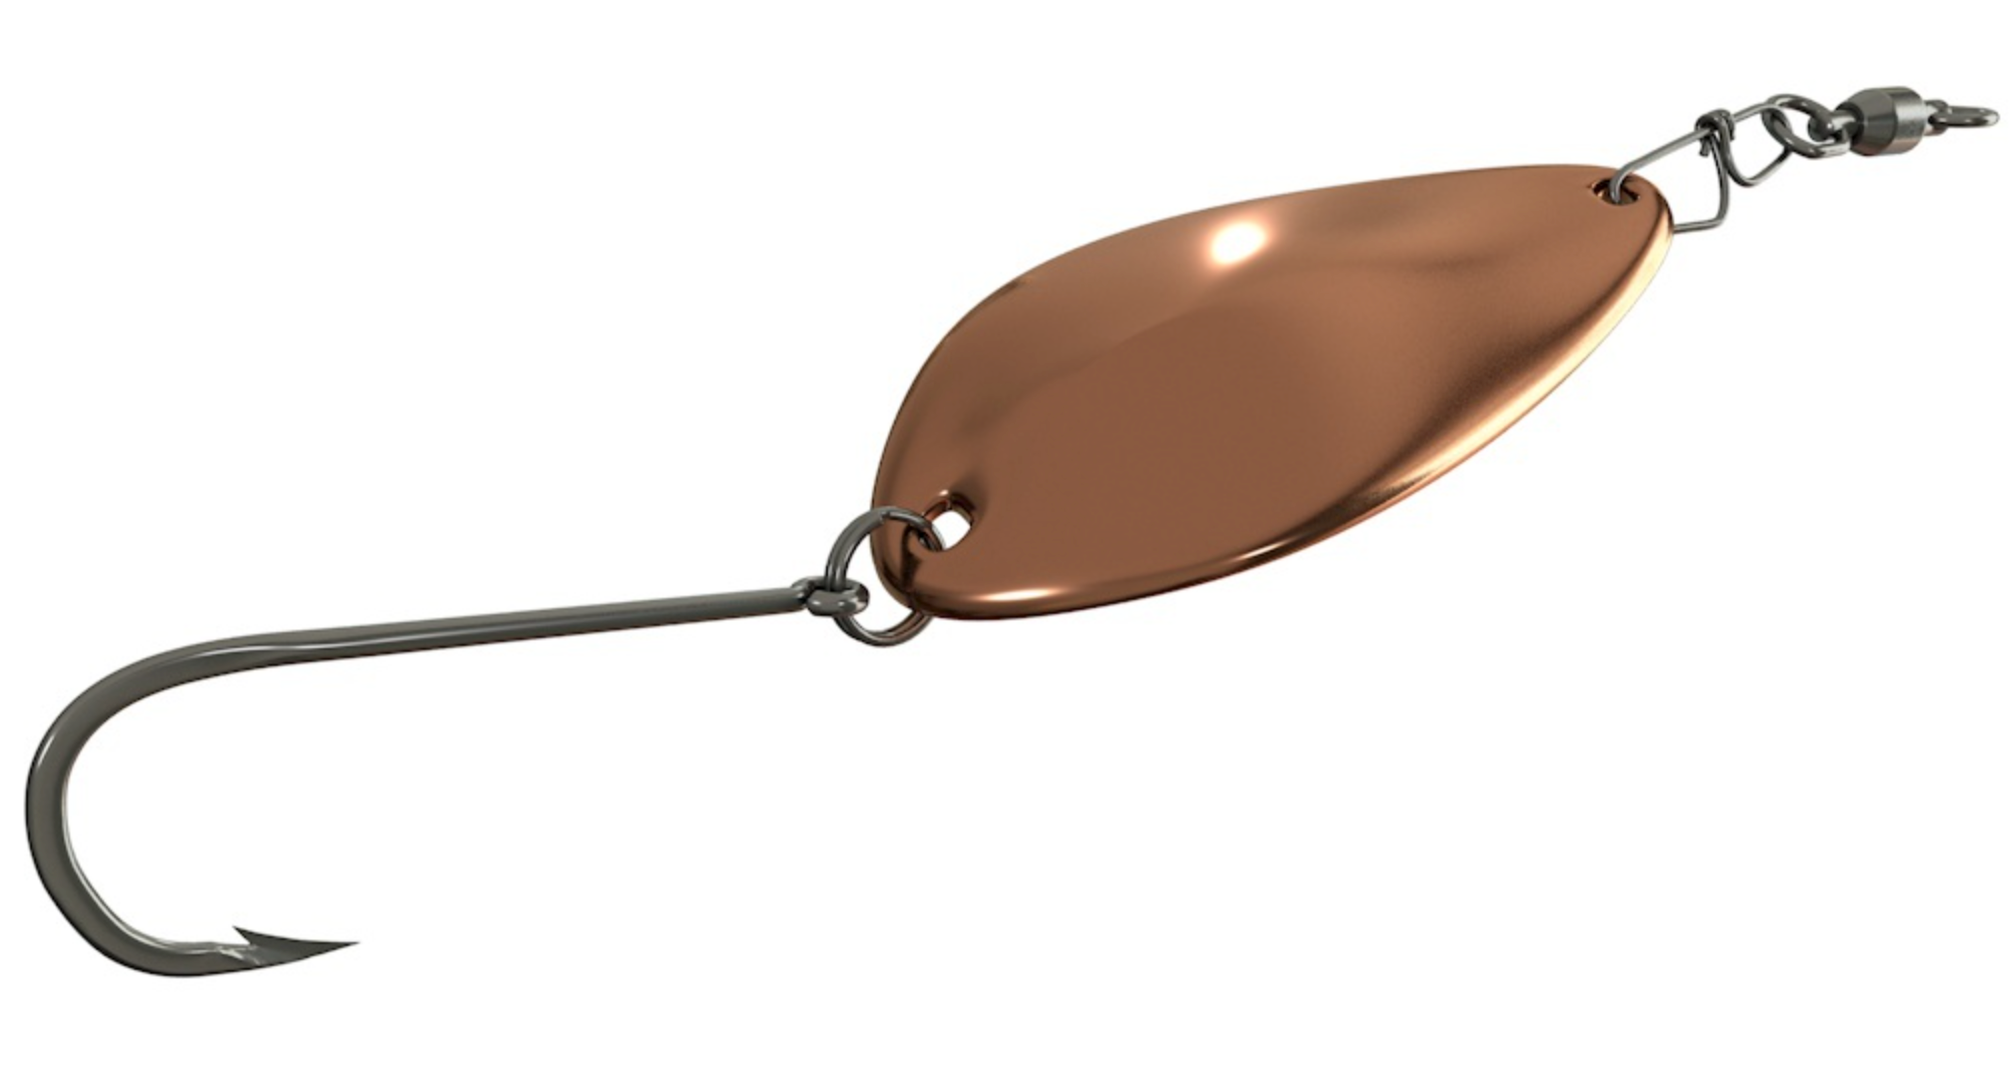 P-Line Pro Steel Spoon Copper / 2/5 oz